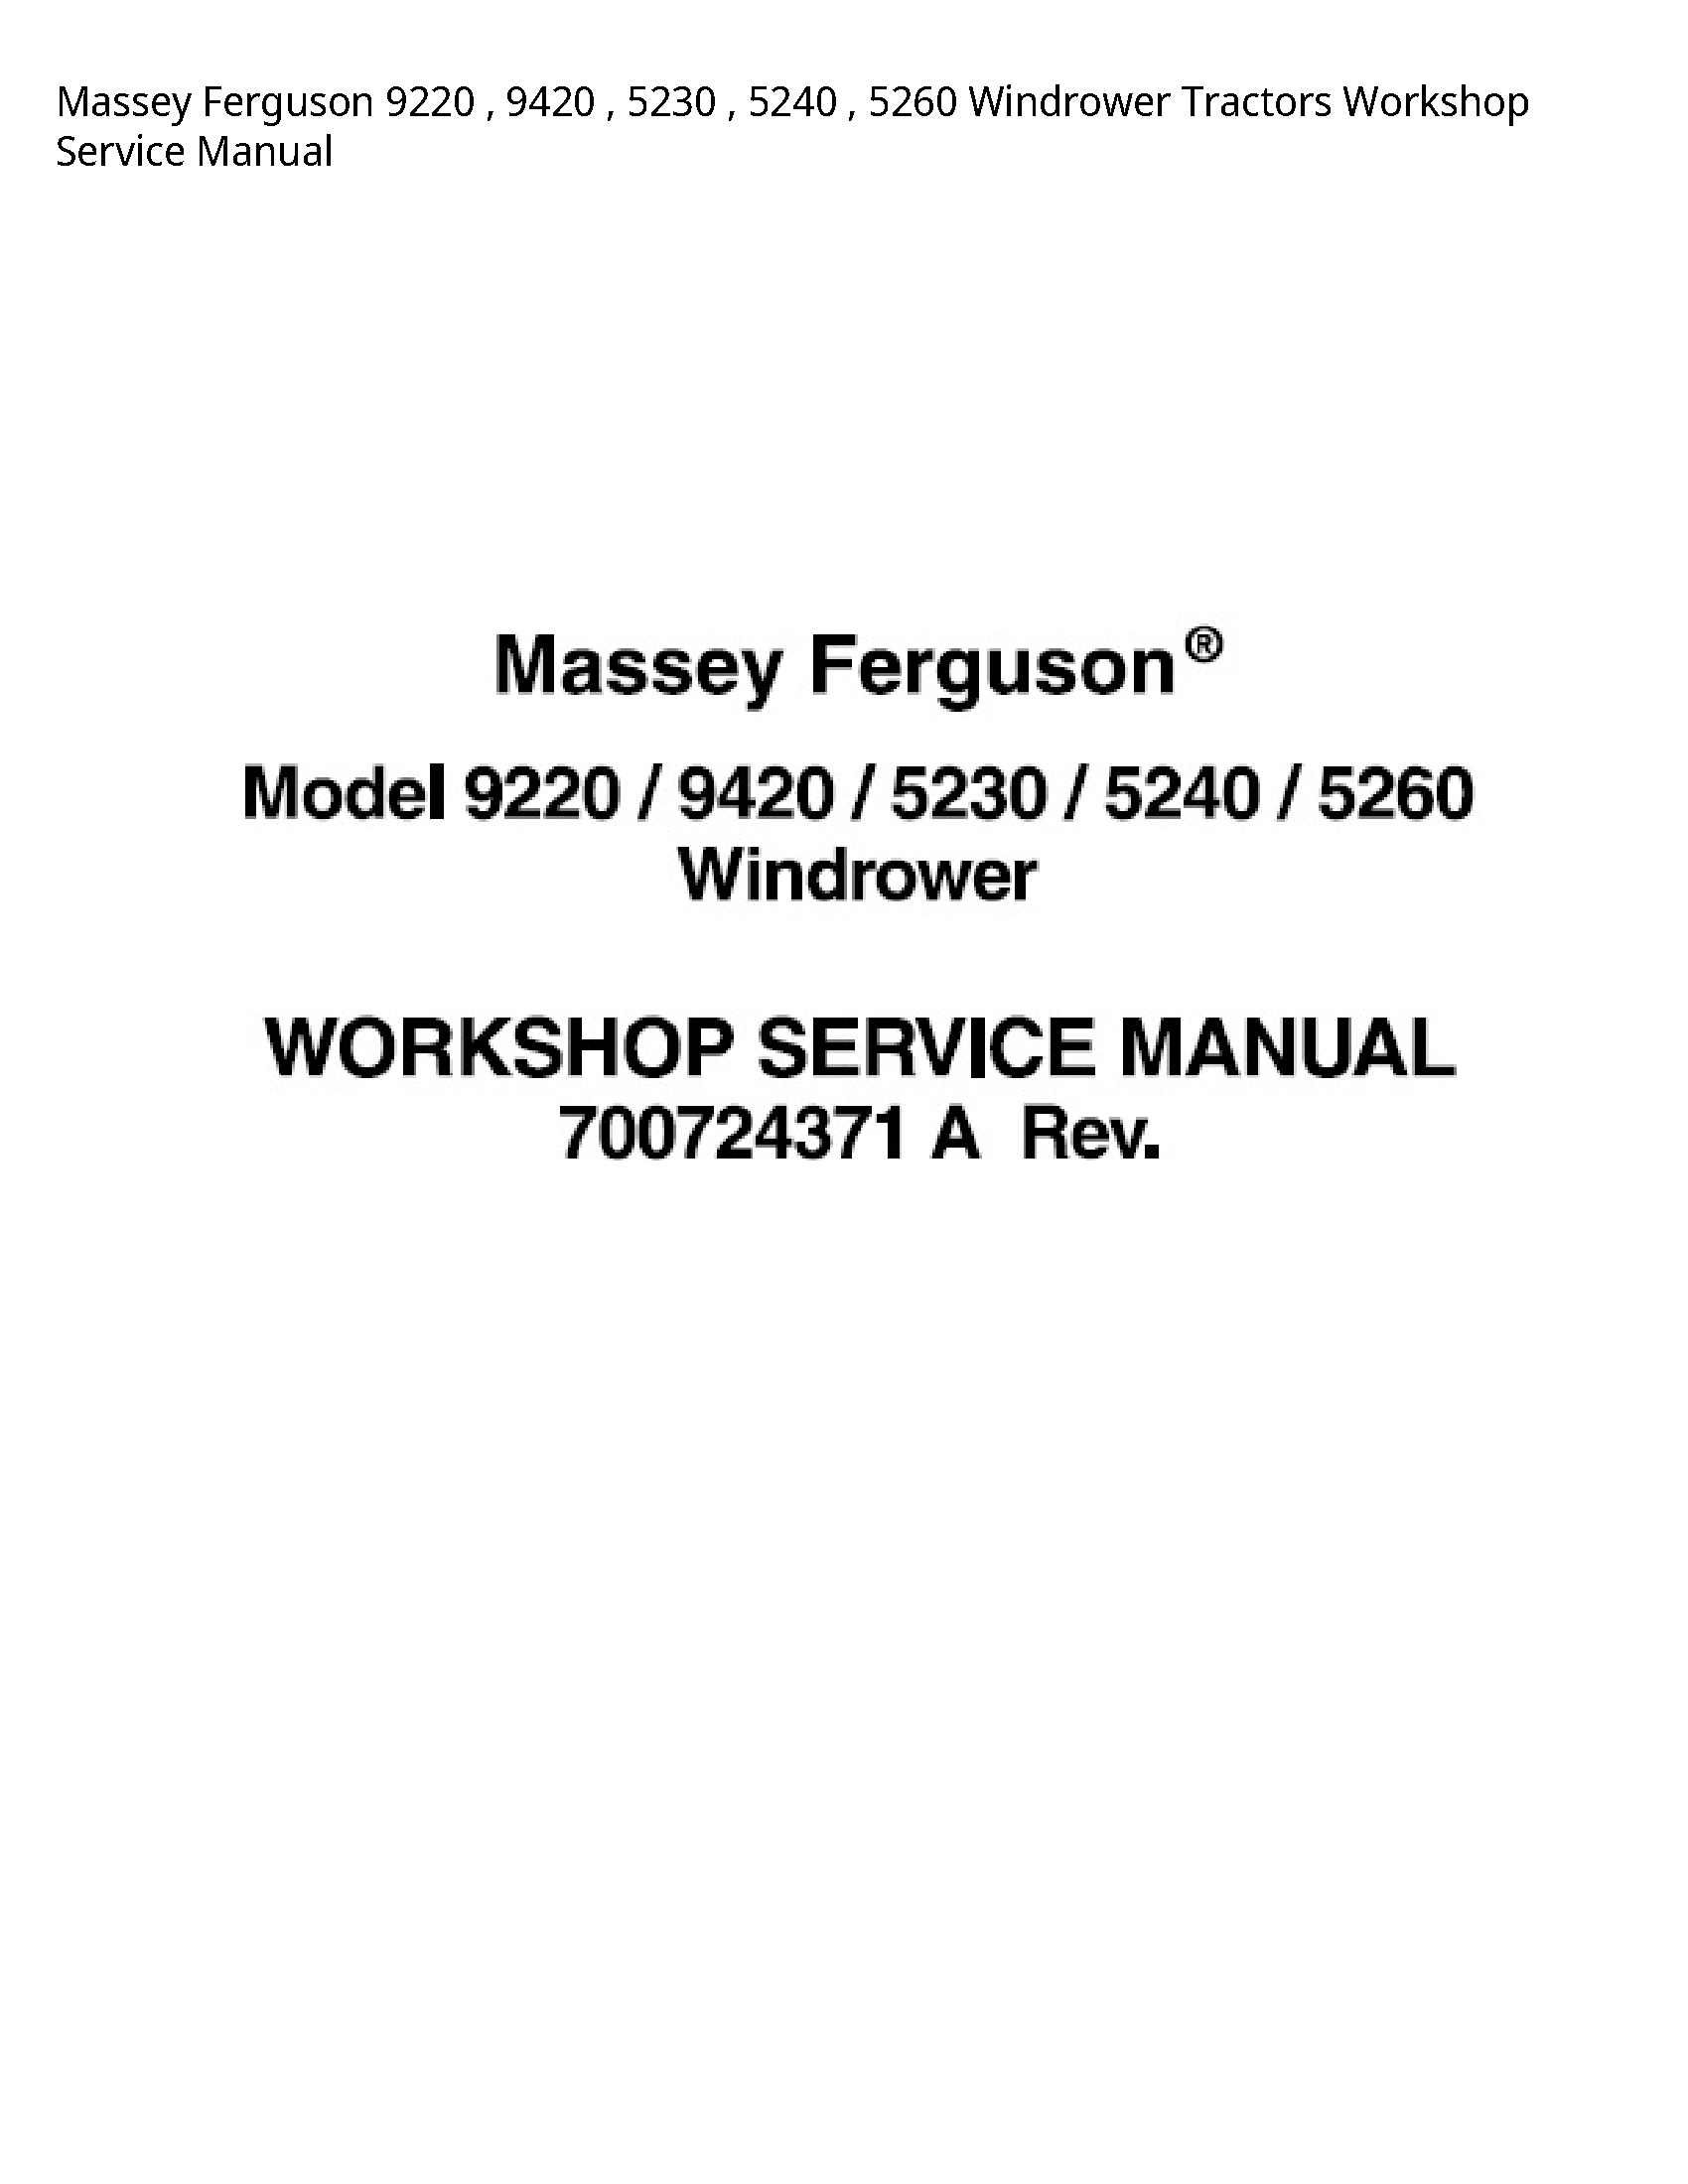 Massey Ferguson 9220 Windrower Tractors Service manual